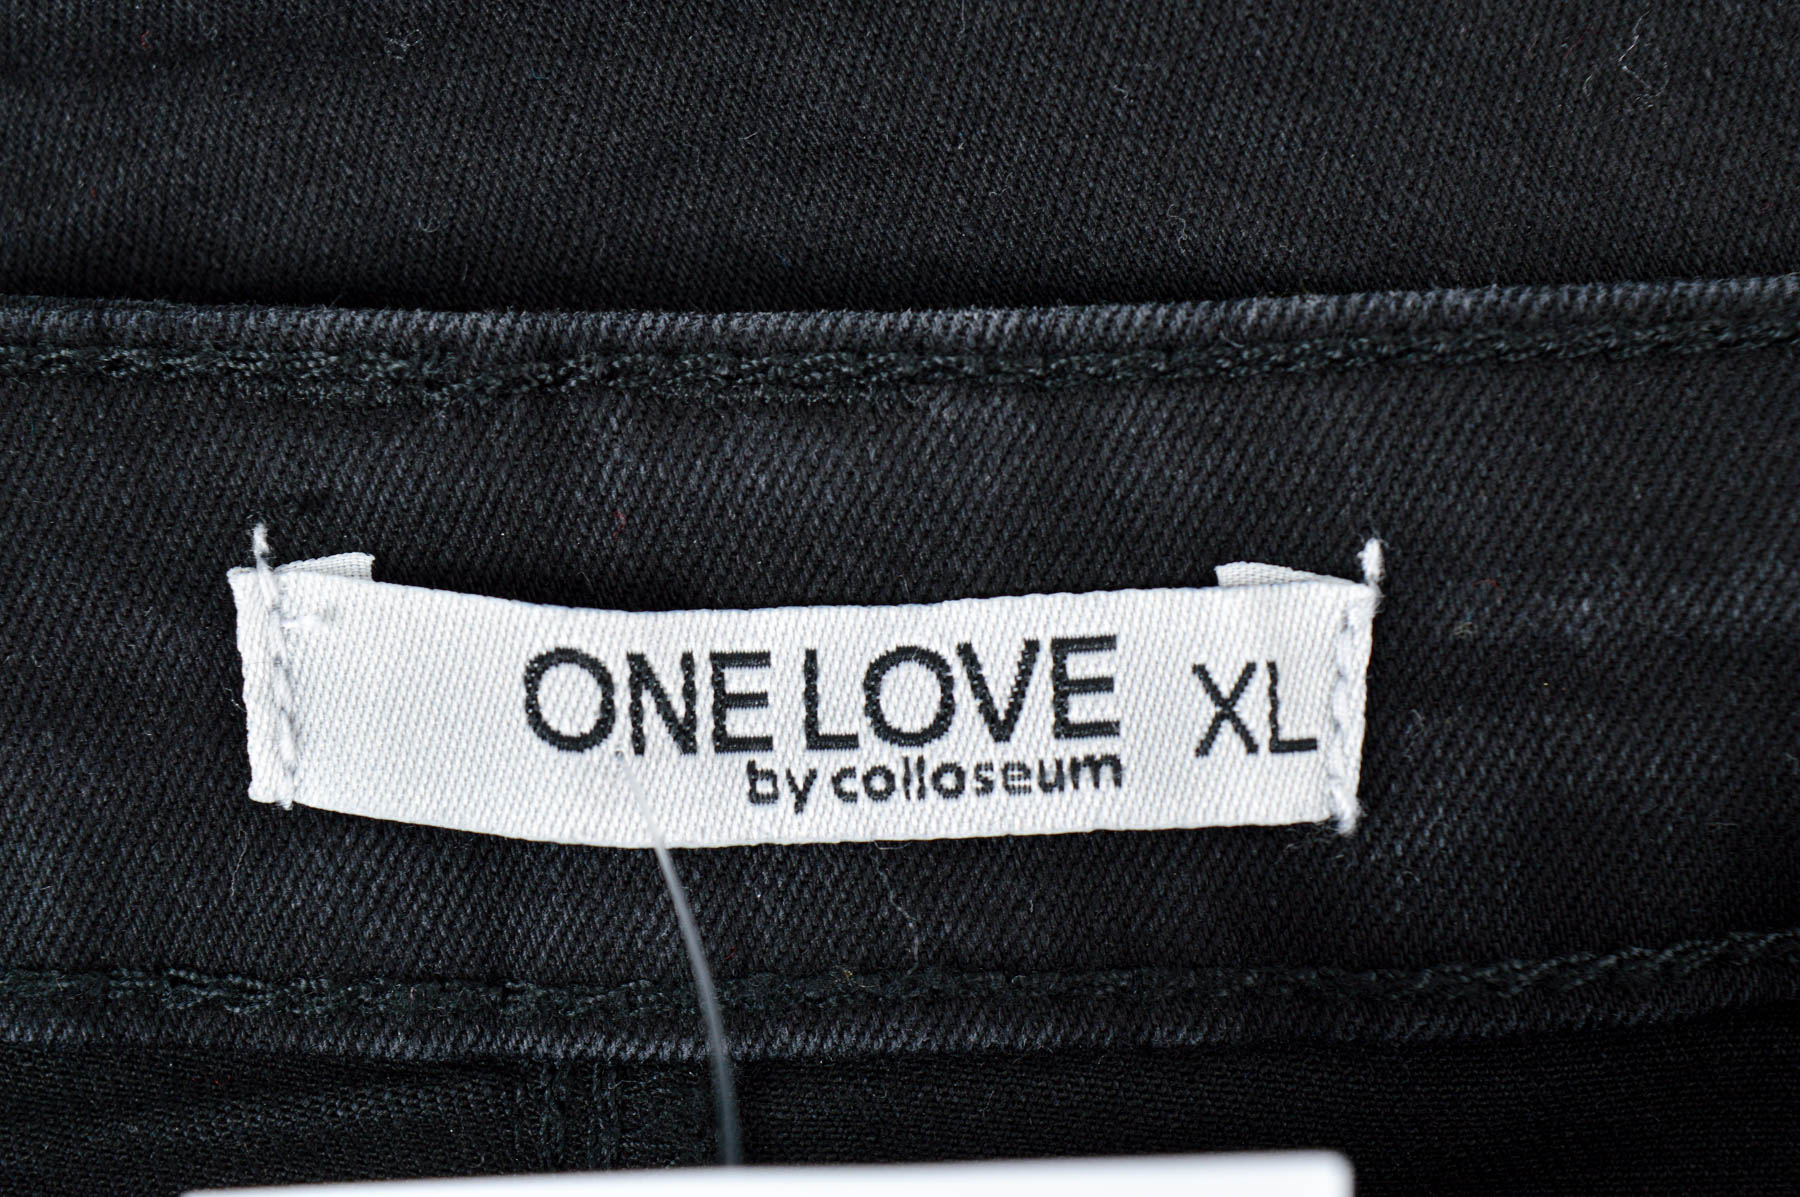 Denim skirt - ONE LOVE by colloseum - 2